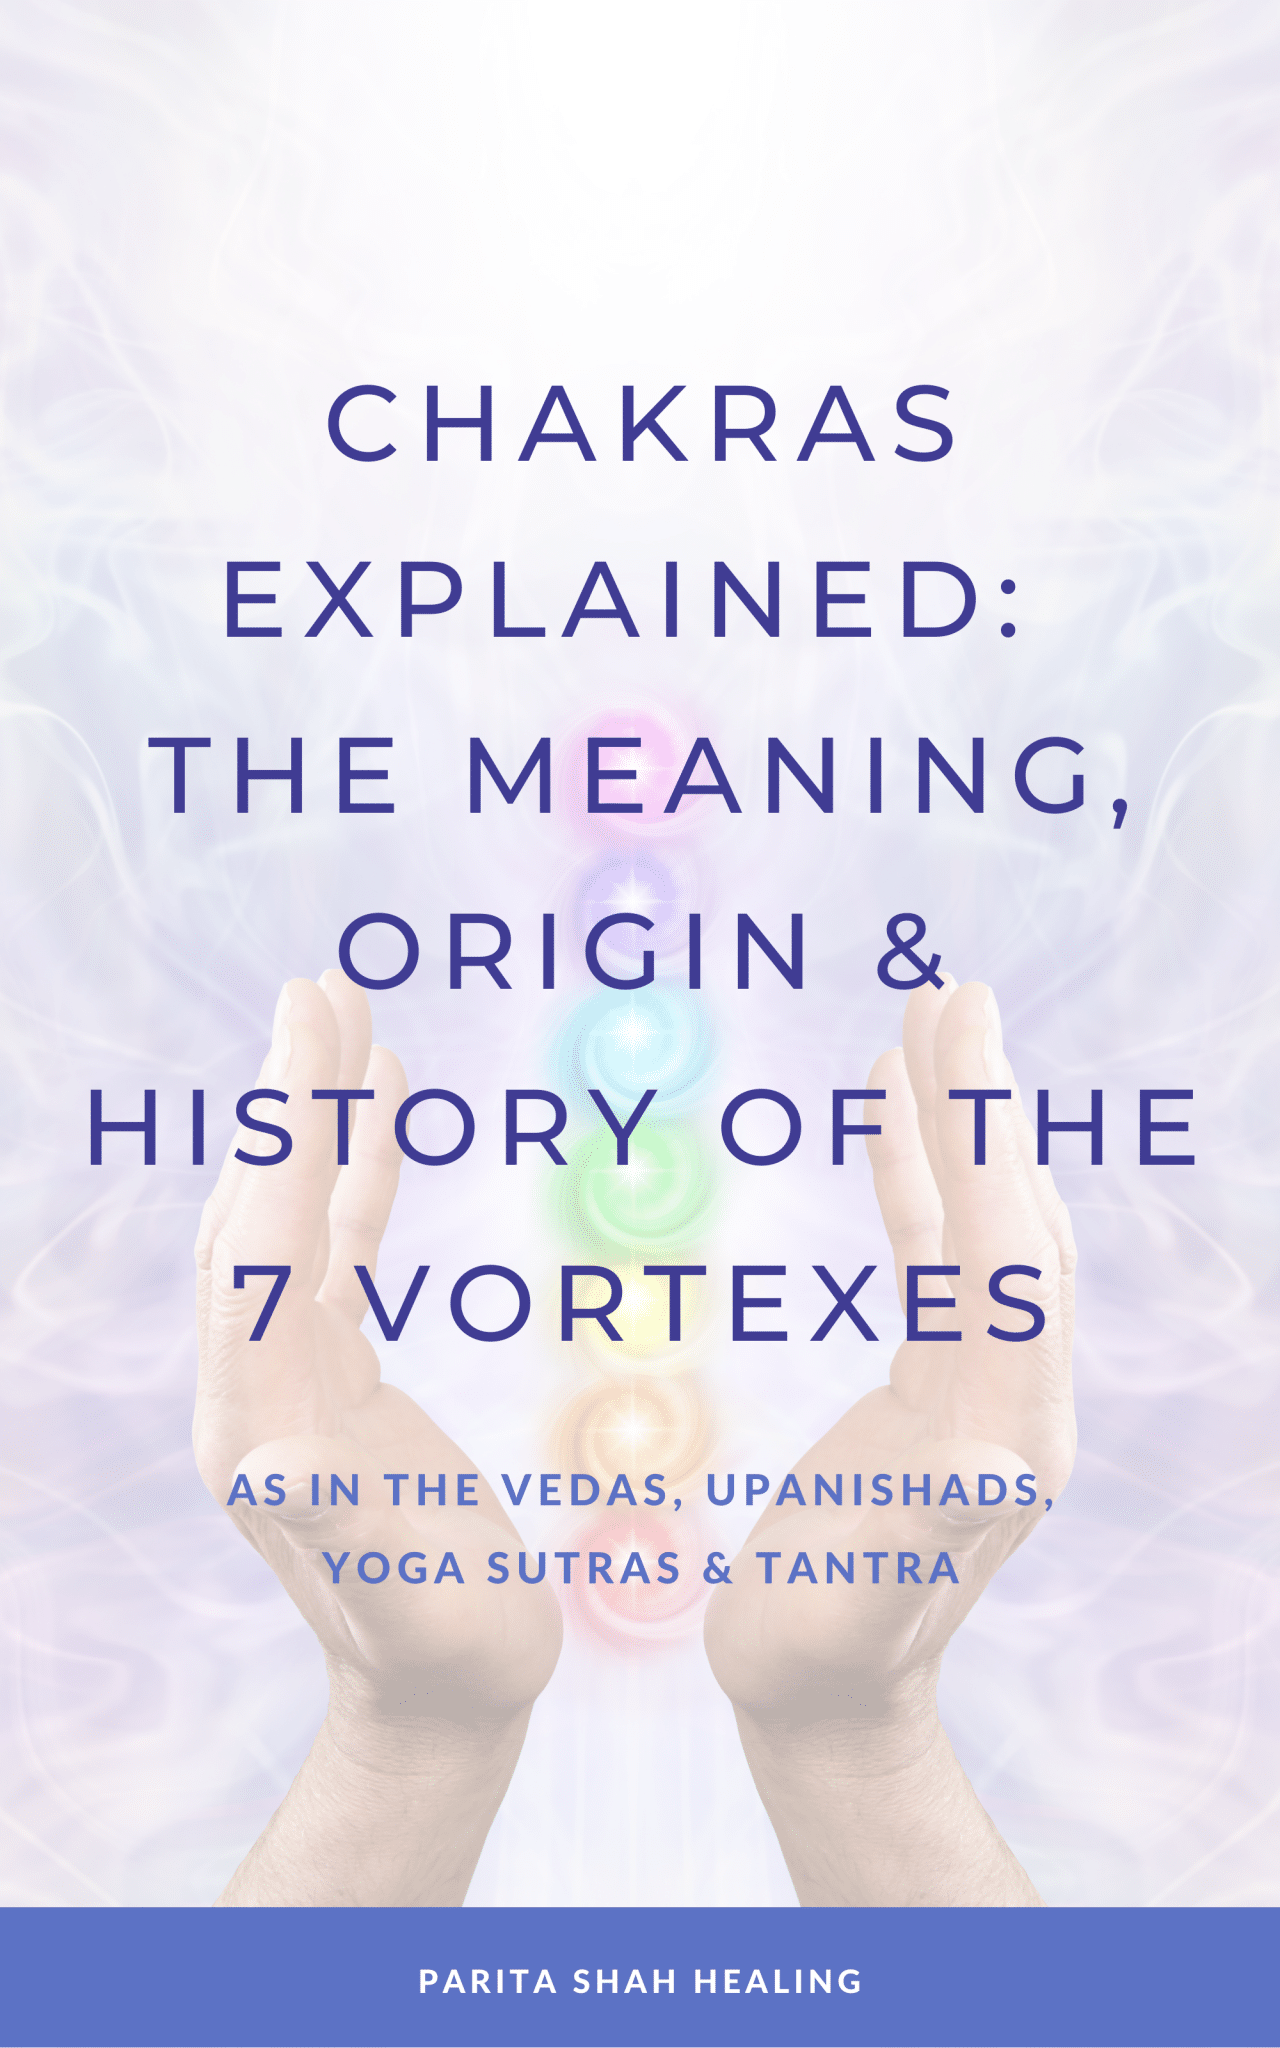 Chakras Explained: History, Origin & Meaning